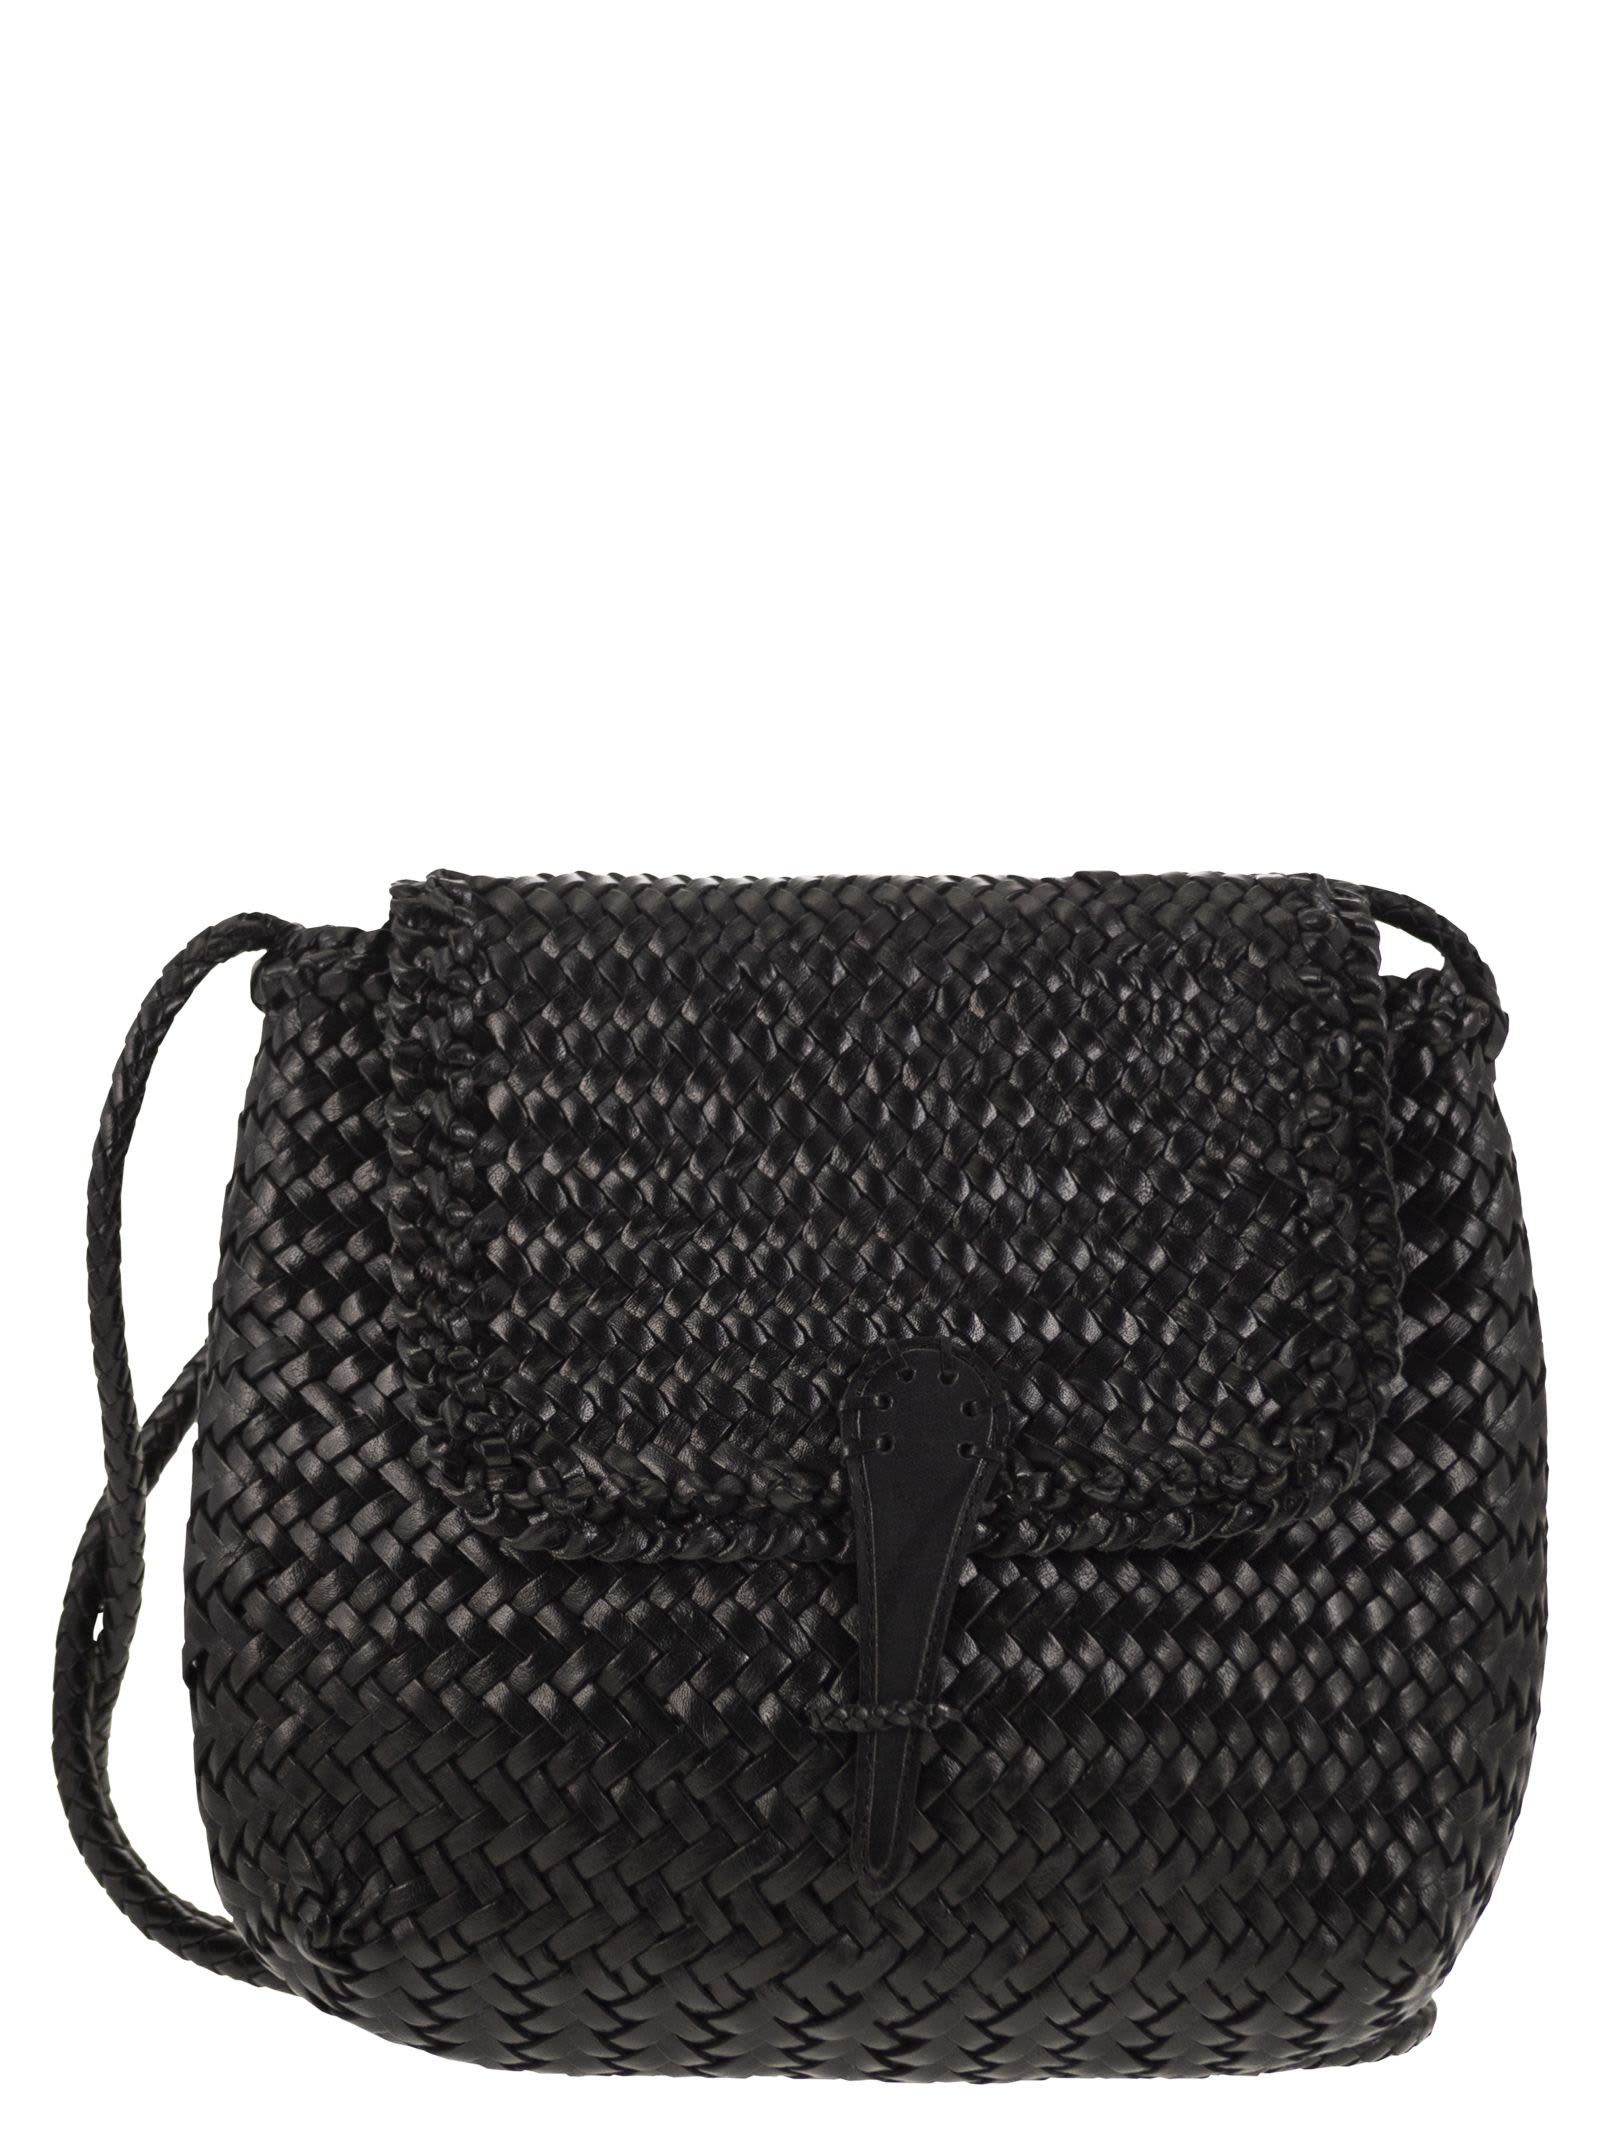 Medium City Bag - Woven Leather Bag